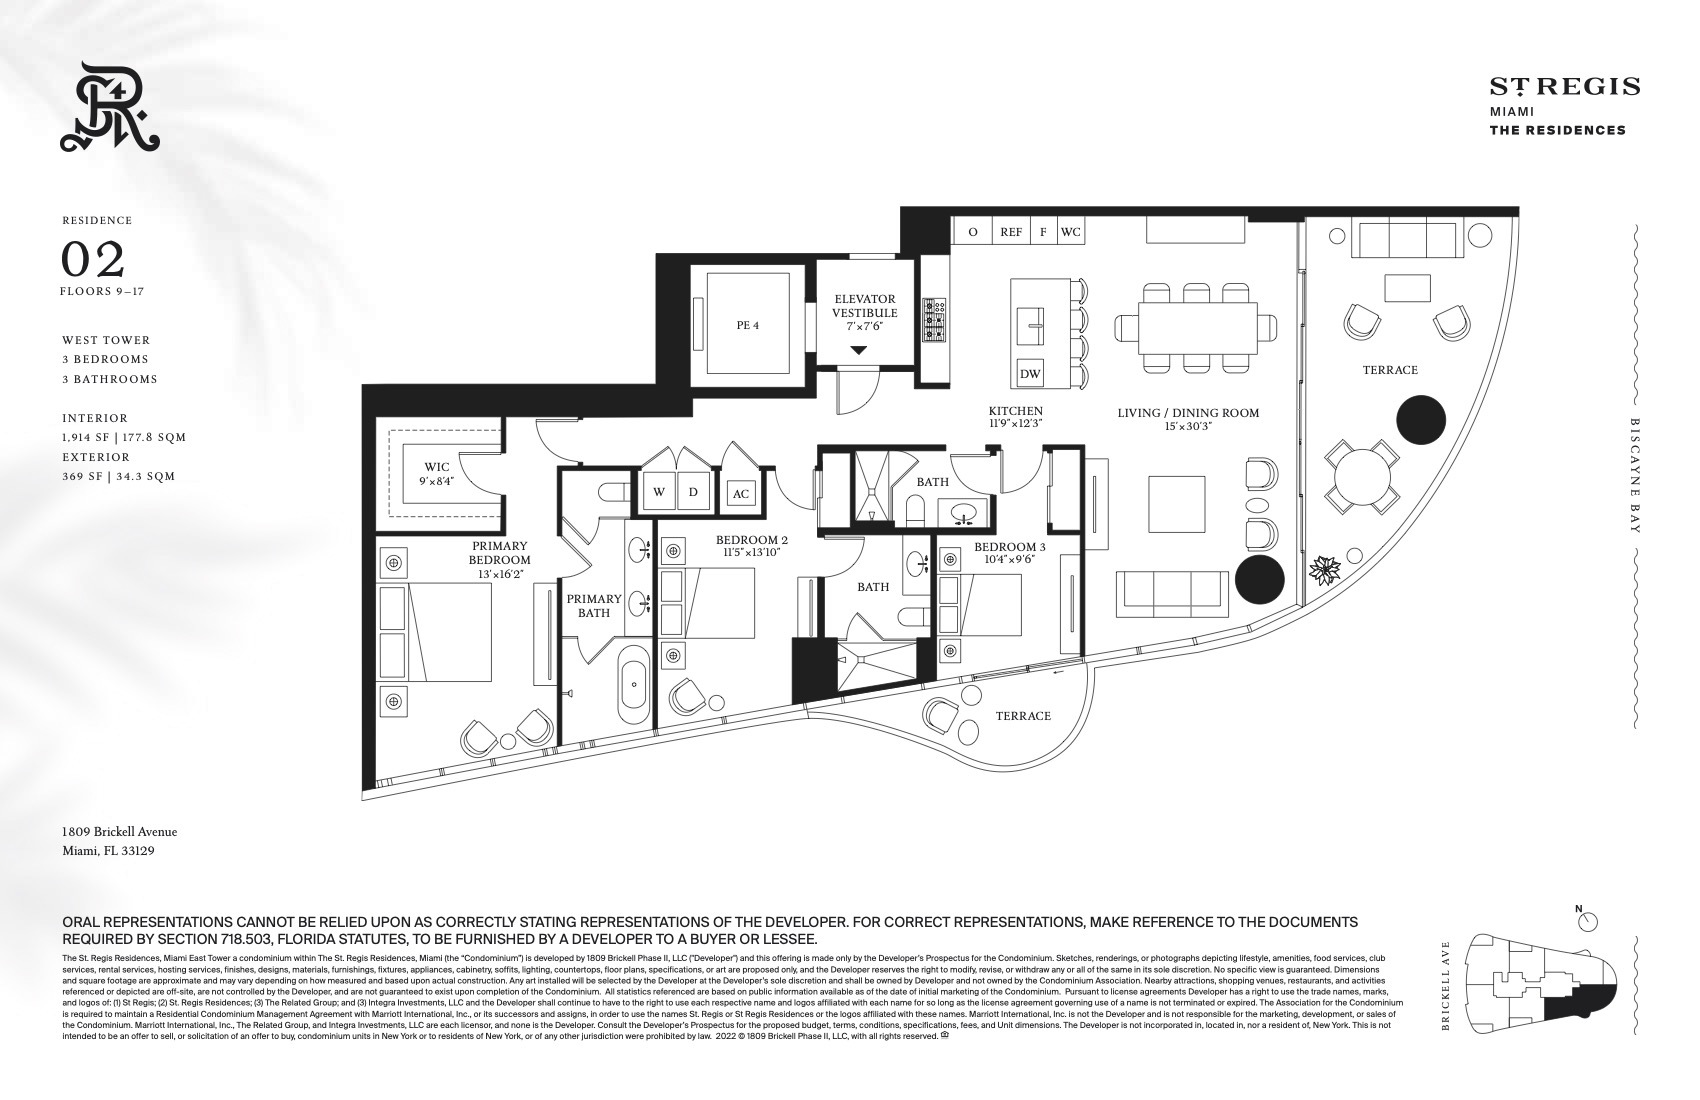 Floor Plan for St. Regis Brickell Floorplans, Residence 02 Floors 9-17